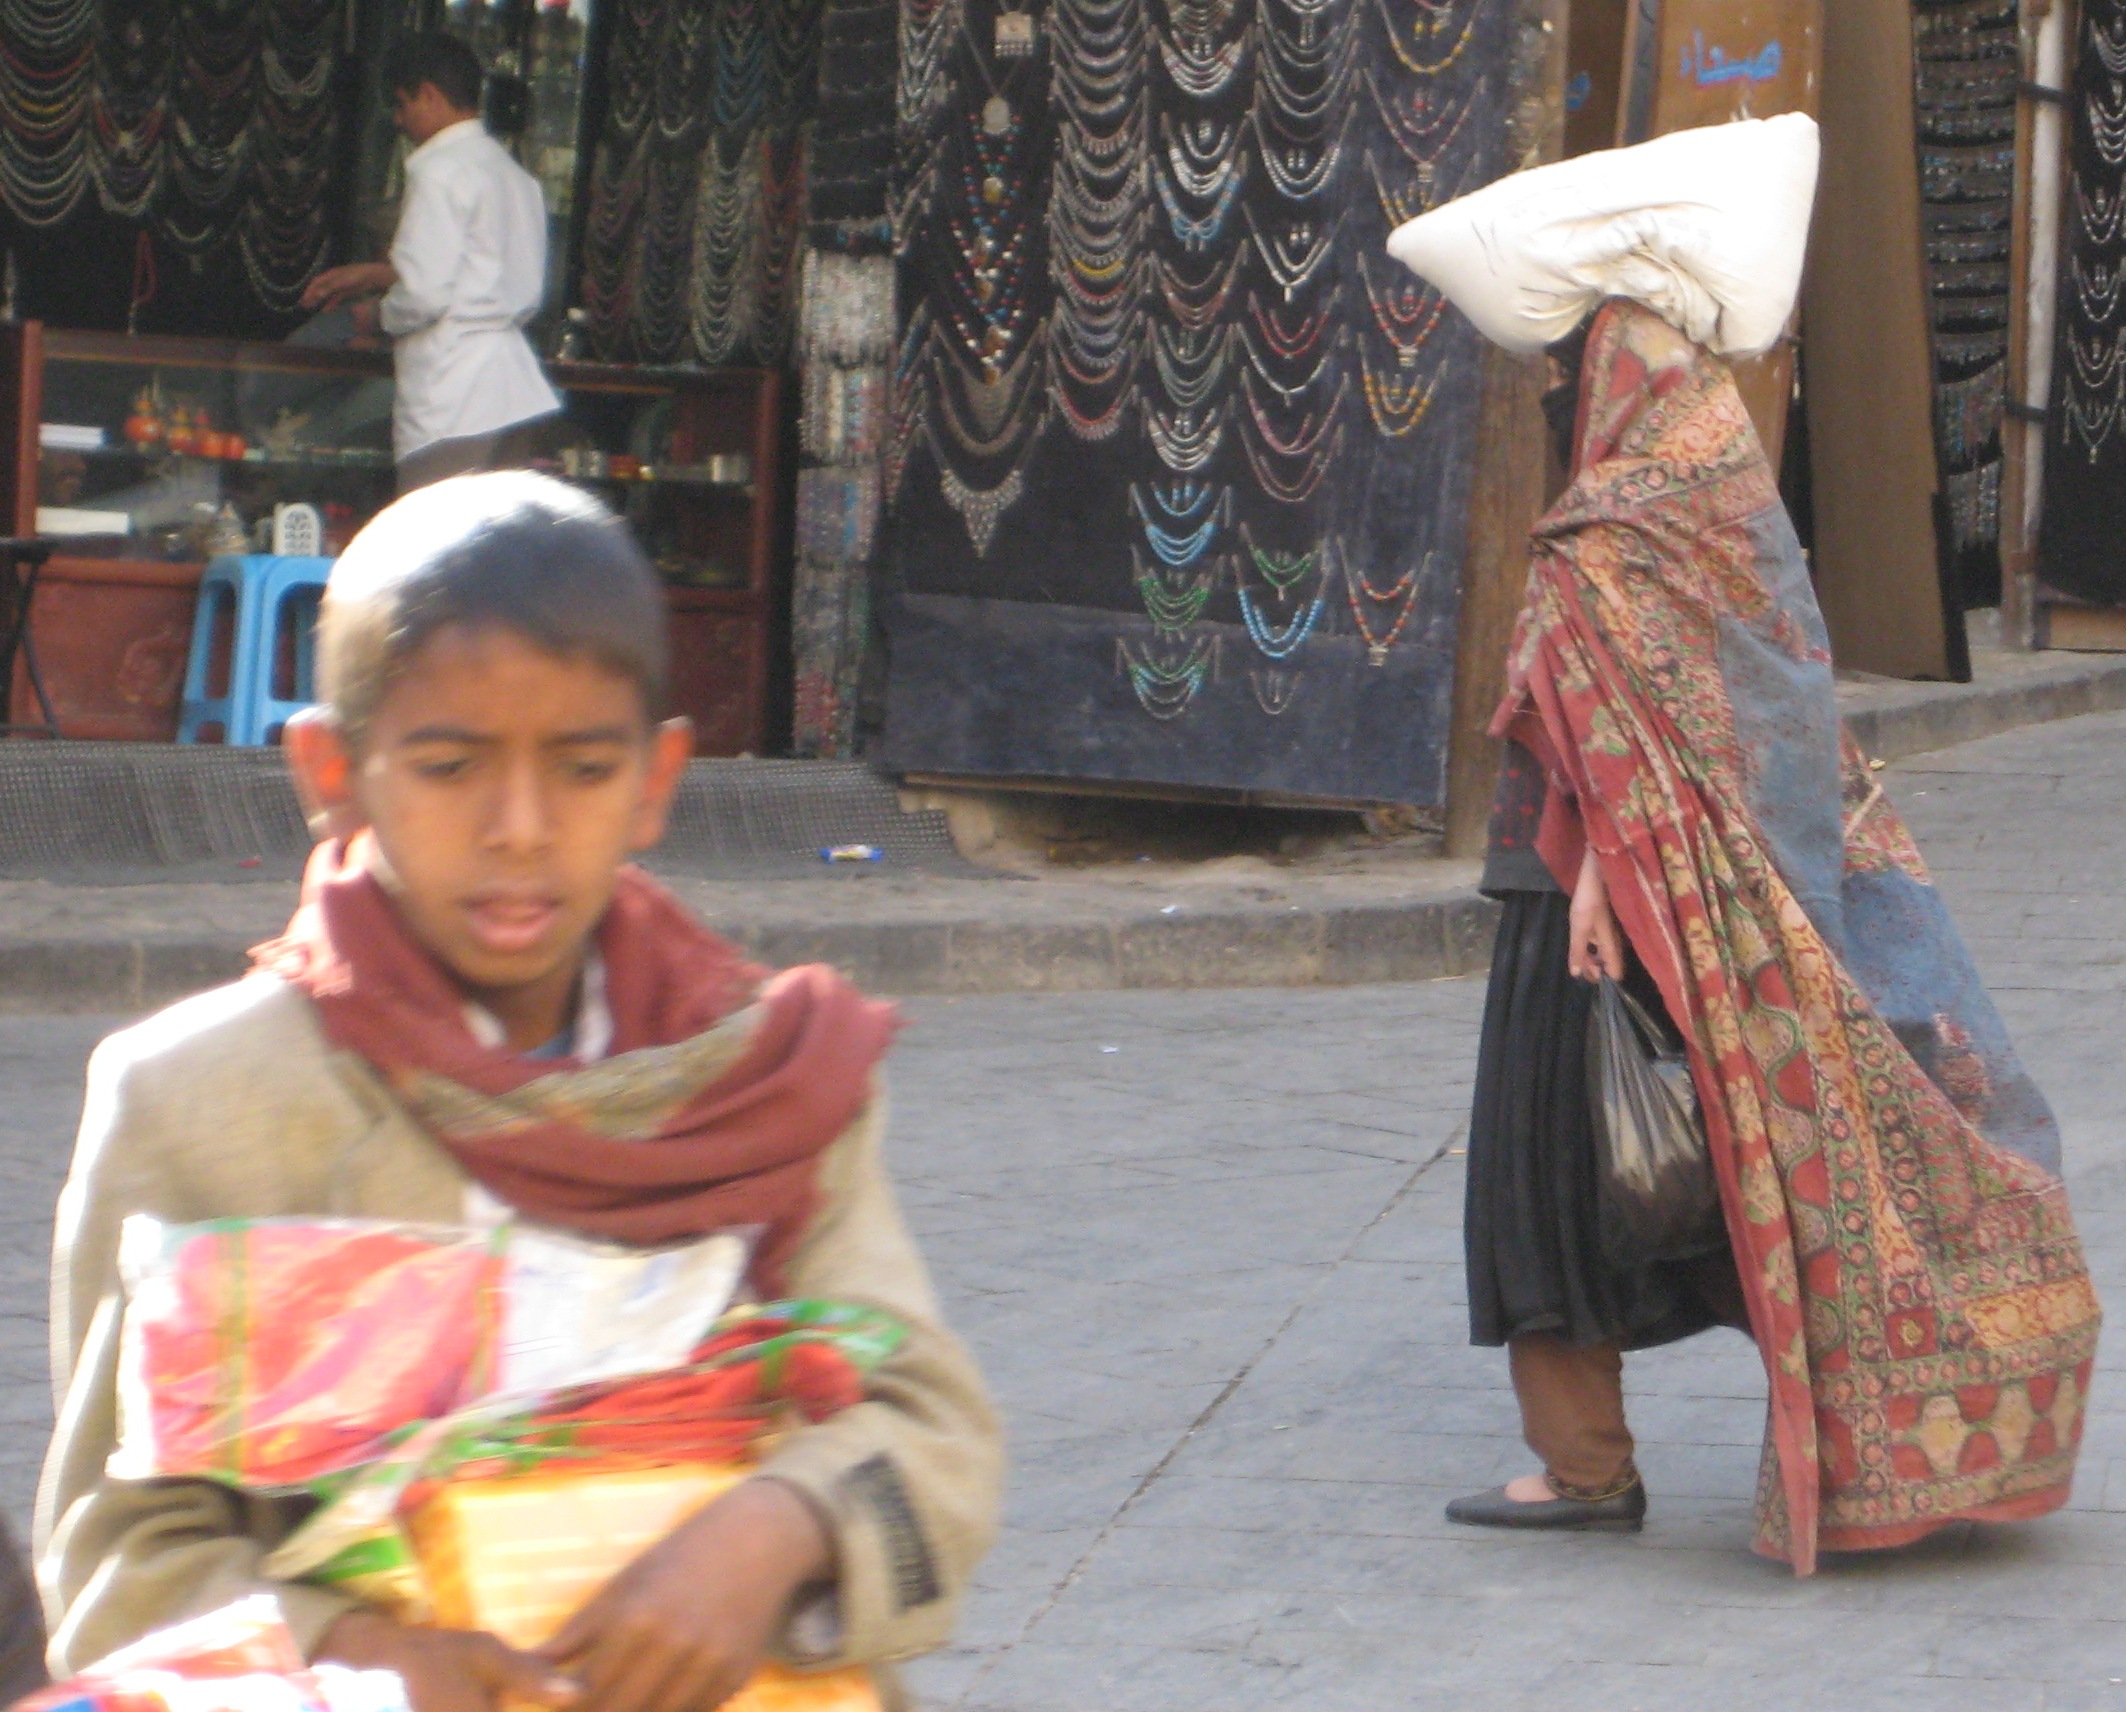 blog 62-Yemen woman and boy carrying food